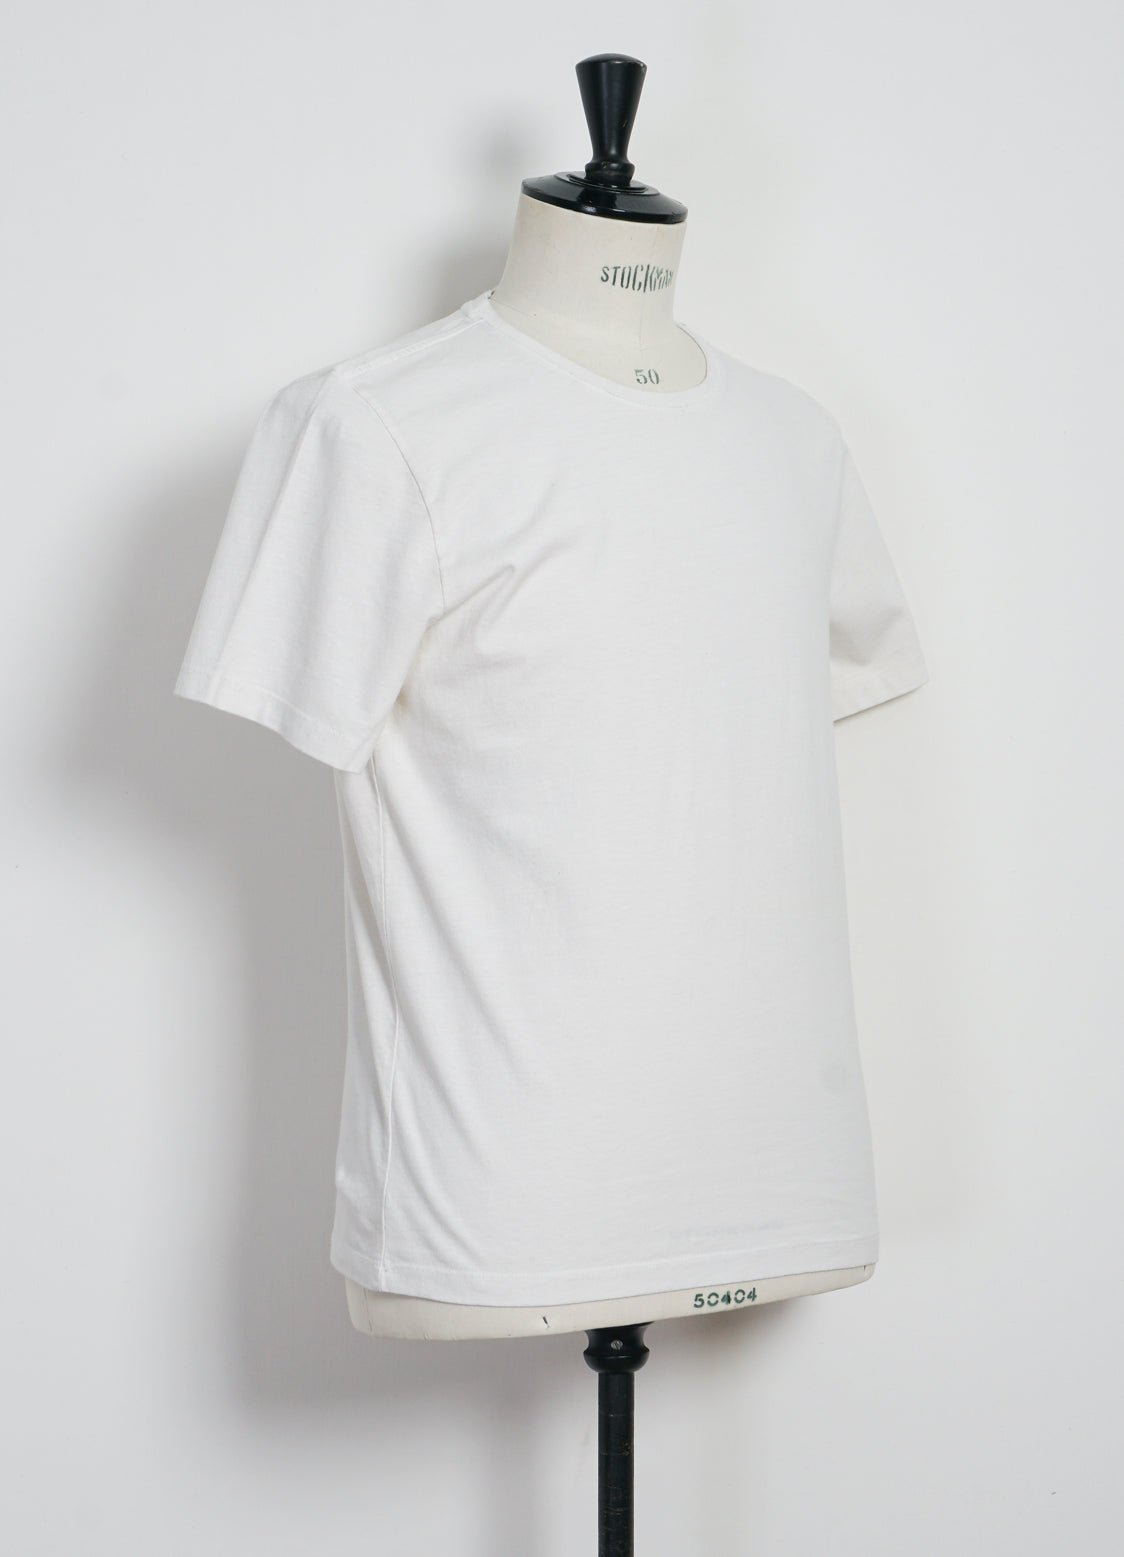 HANSEN GARMENTS - JULIAN | Crew Neck T-Shirt | White - HANSEN Garments